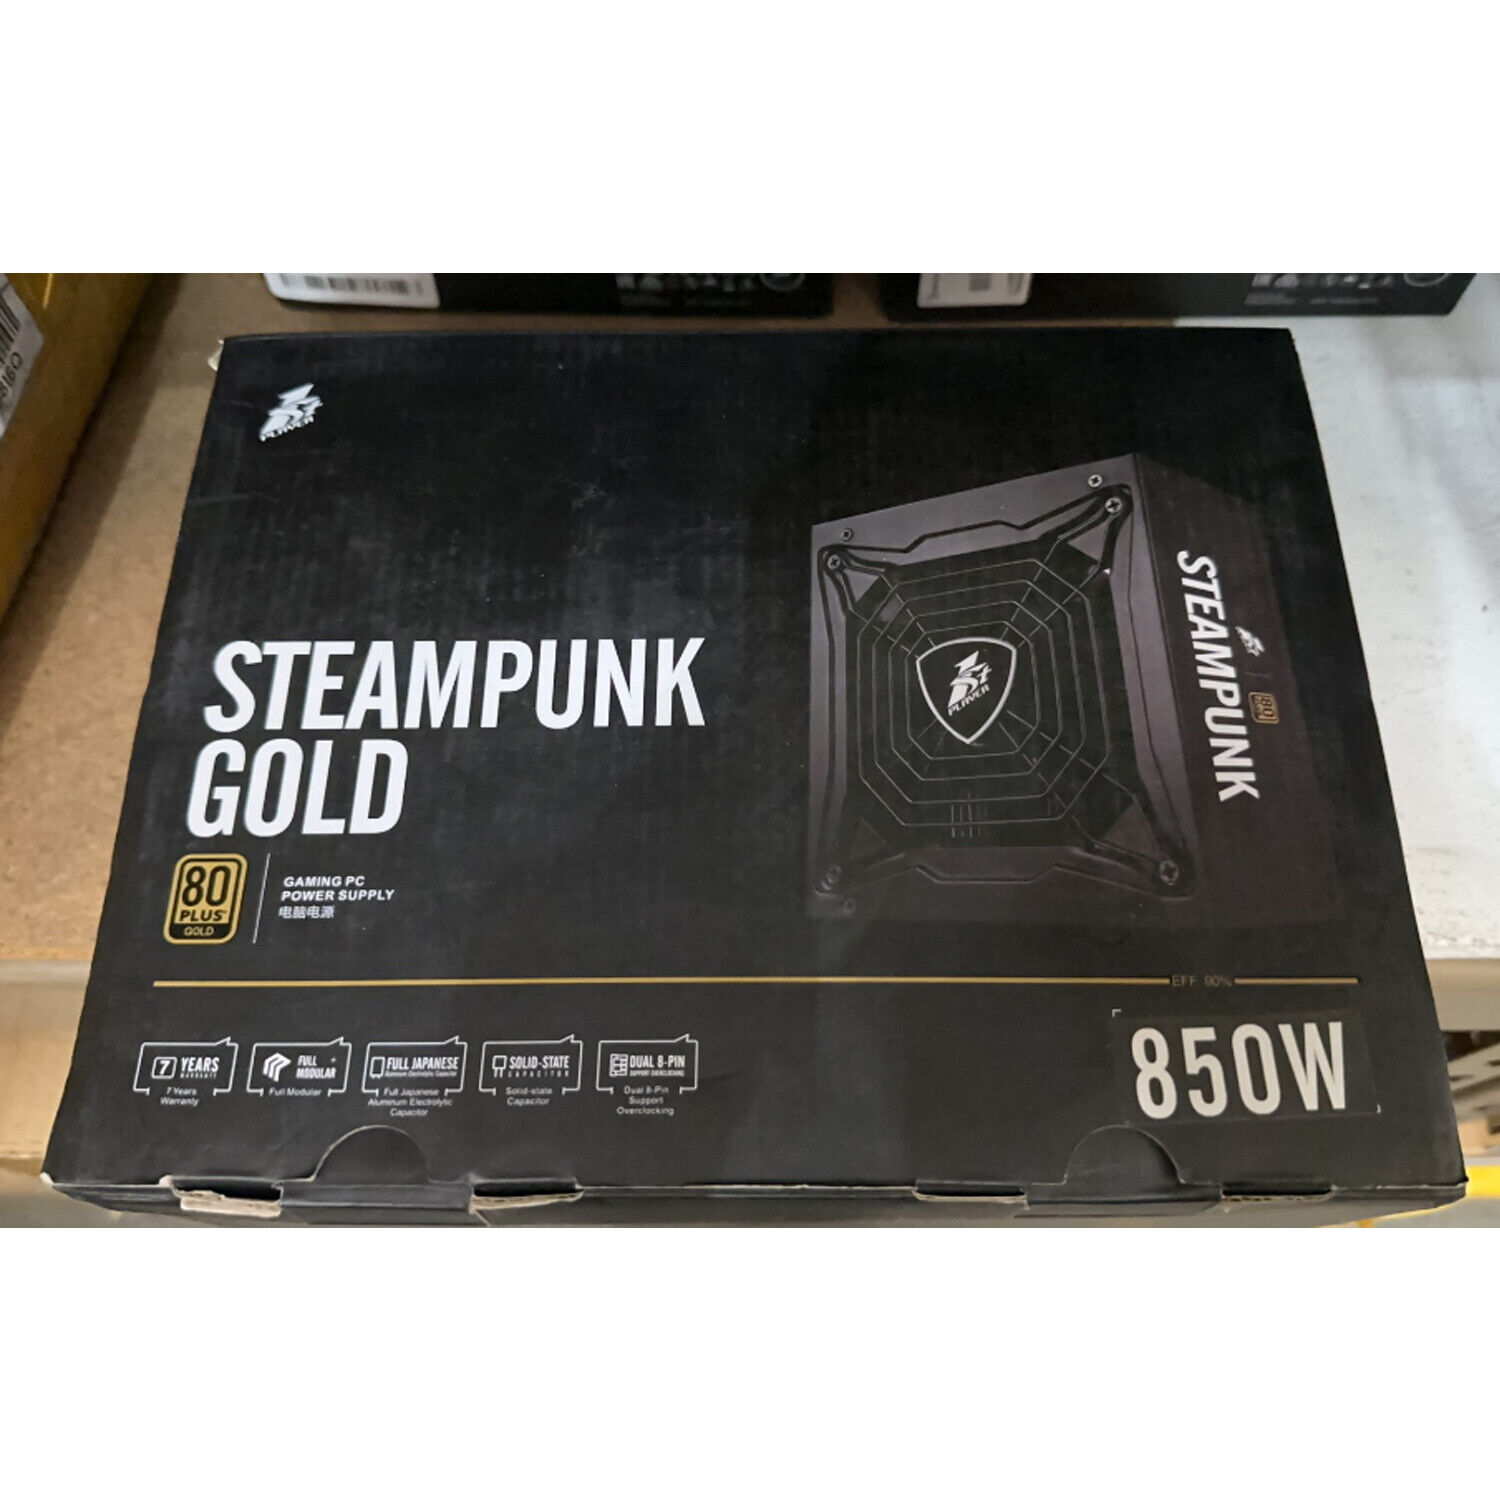 1stplayer STEAMPUNK 850w Power Supply Fully Modular 80 Plus Gold Gaming PSU